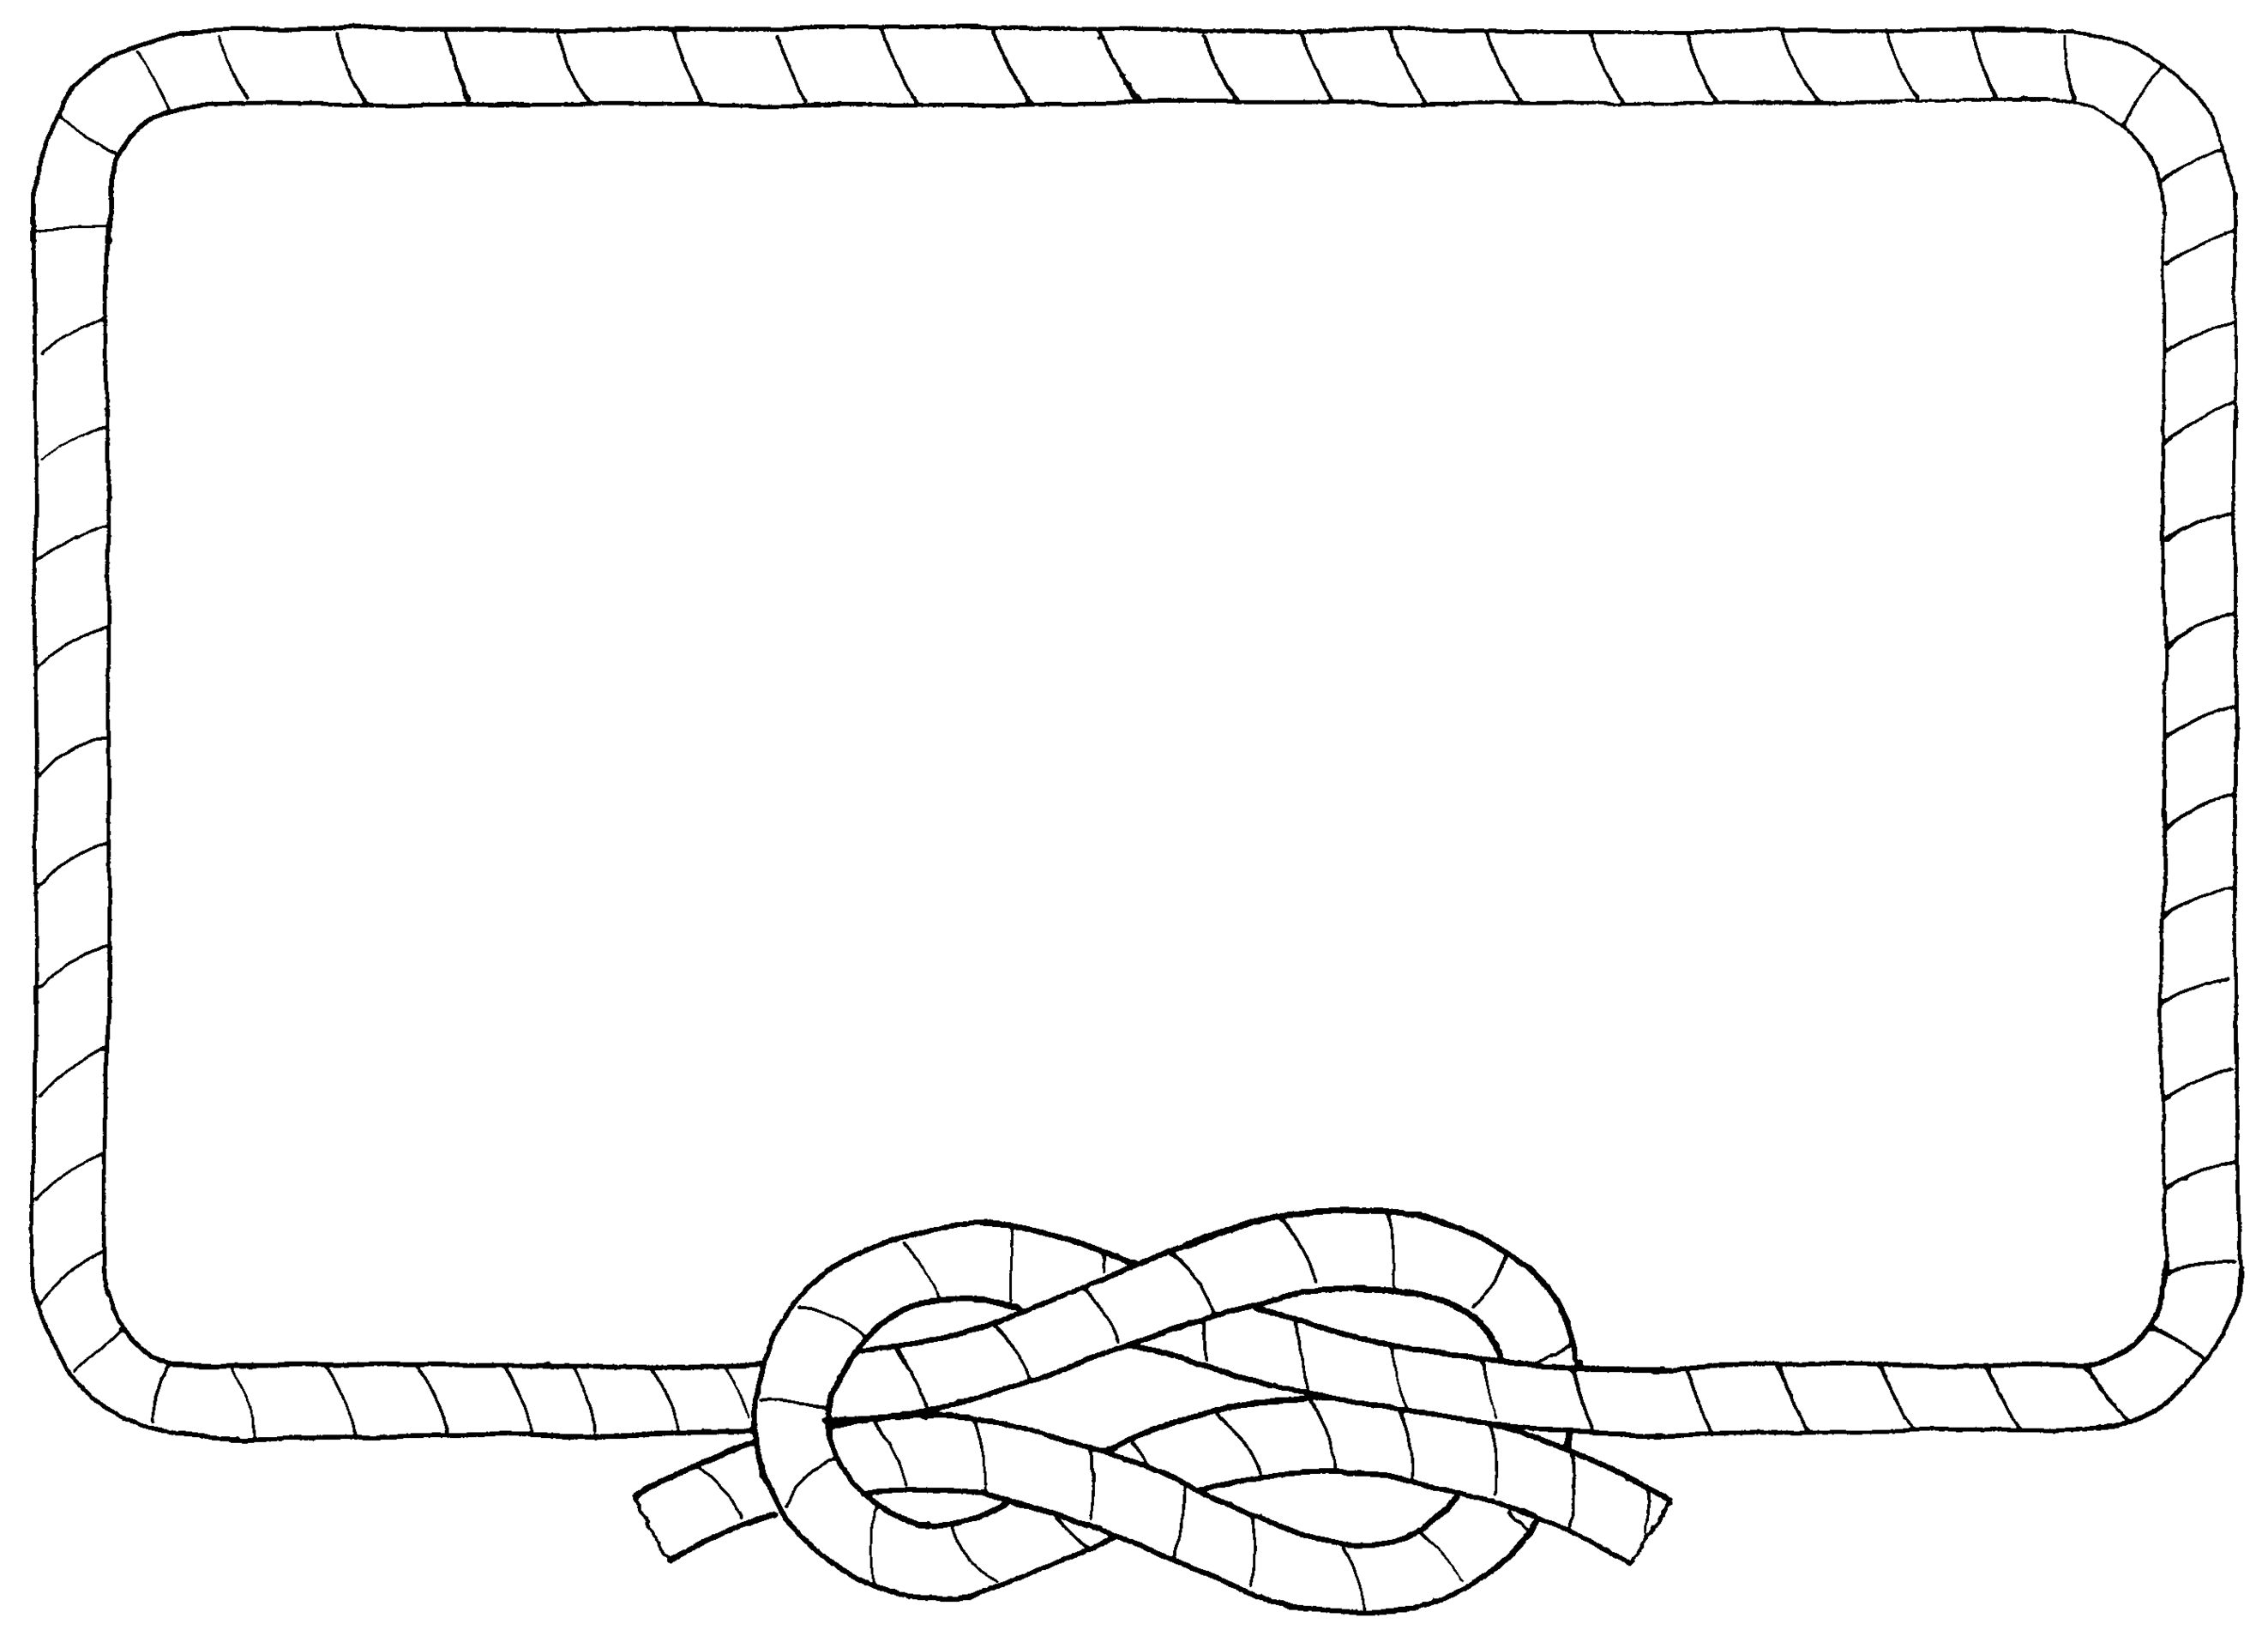 ... Rope Border Clip Art - cl